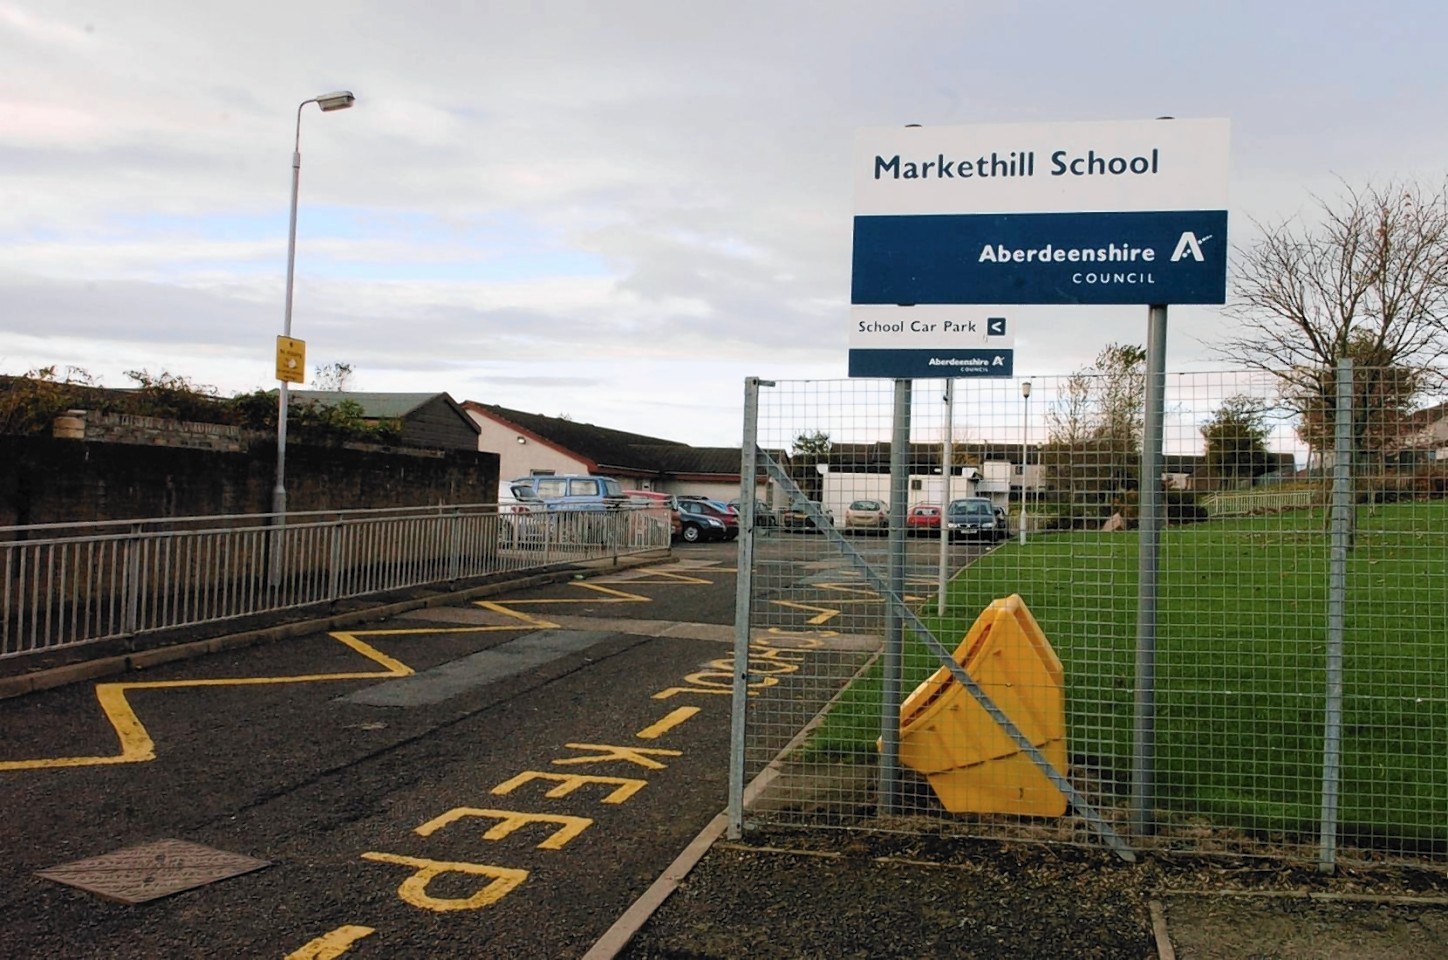 Markethill School